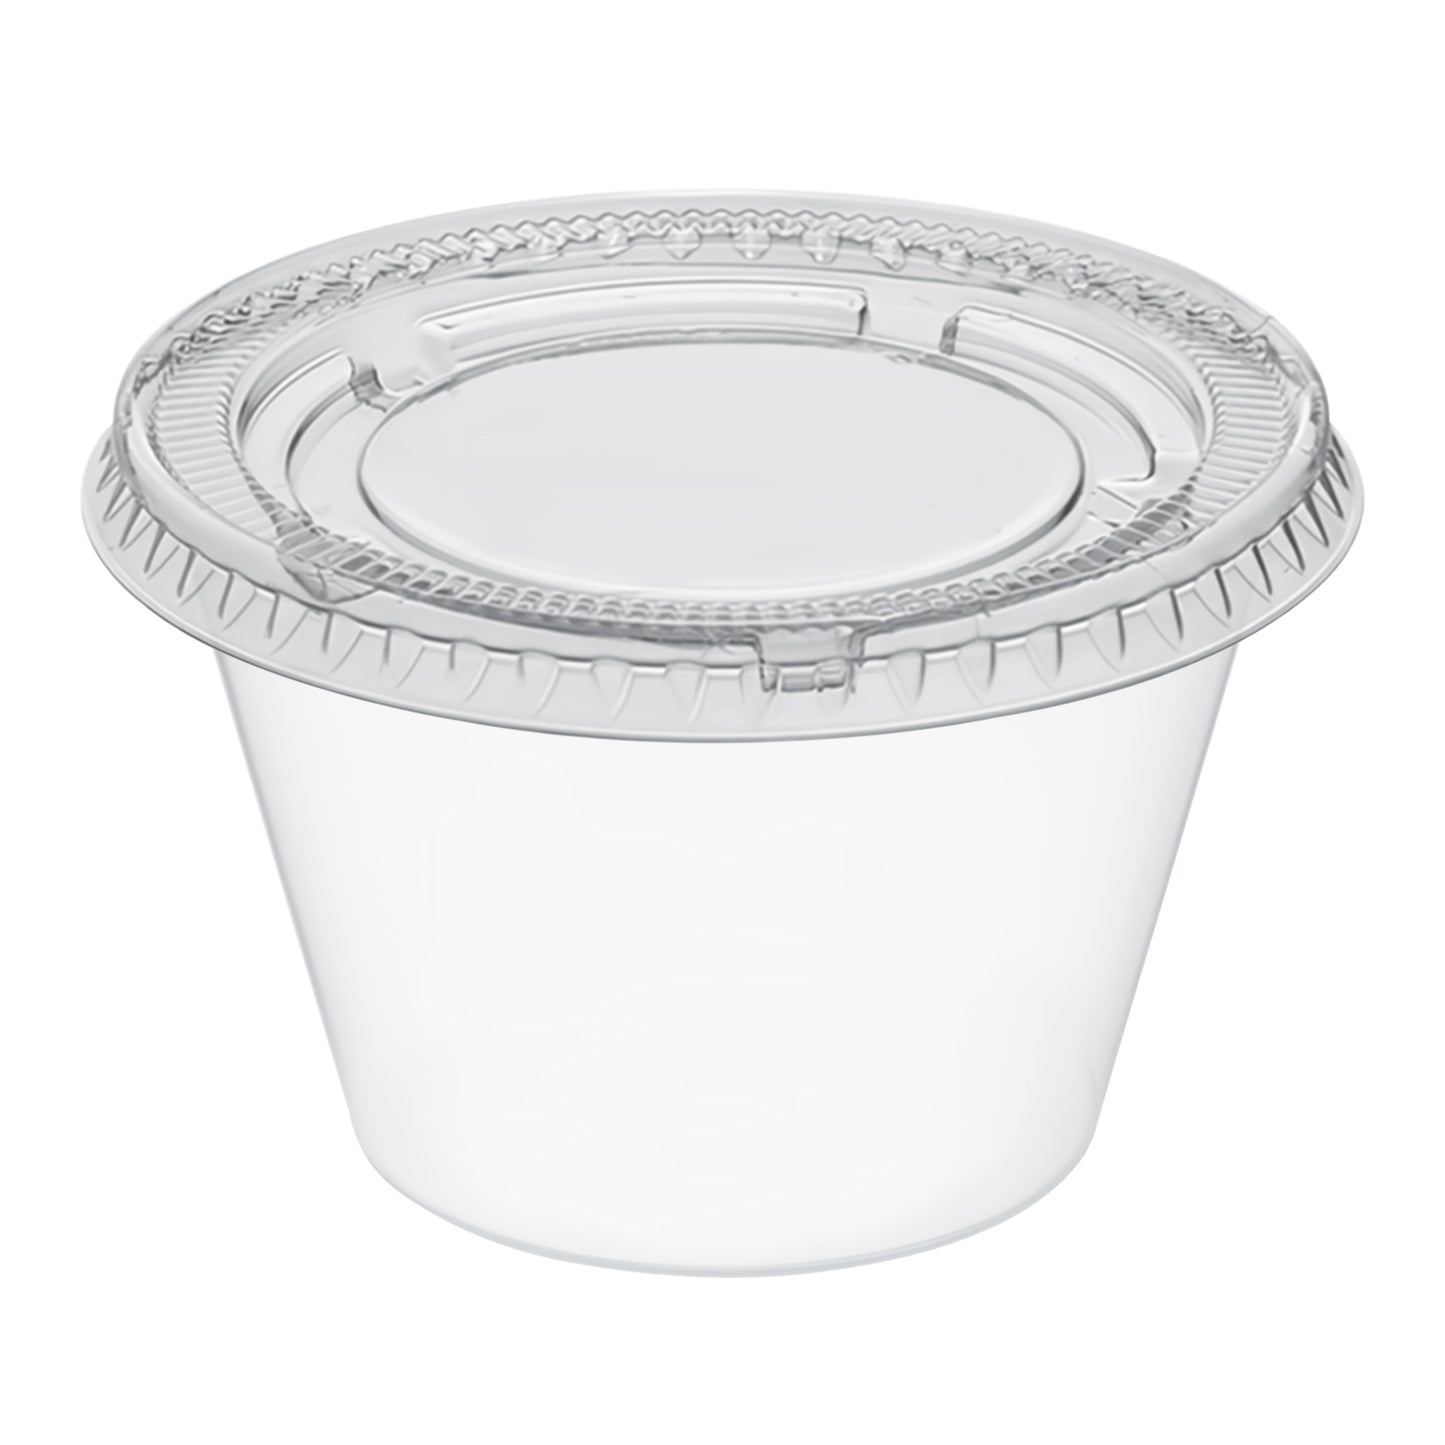 Clear Plastic Disposable Portion / Souffle cup 4oz